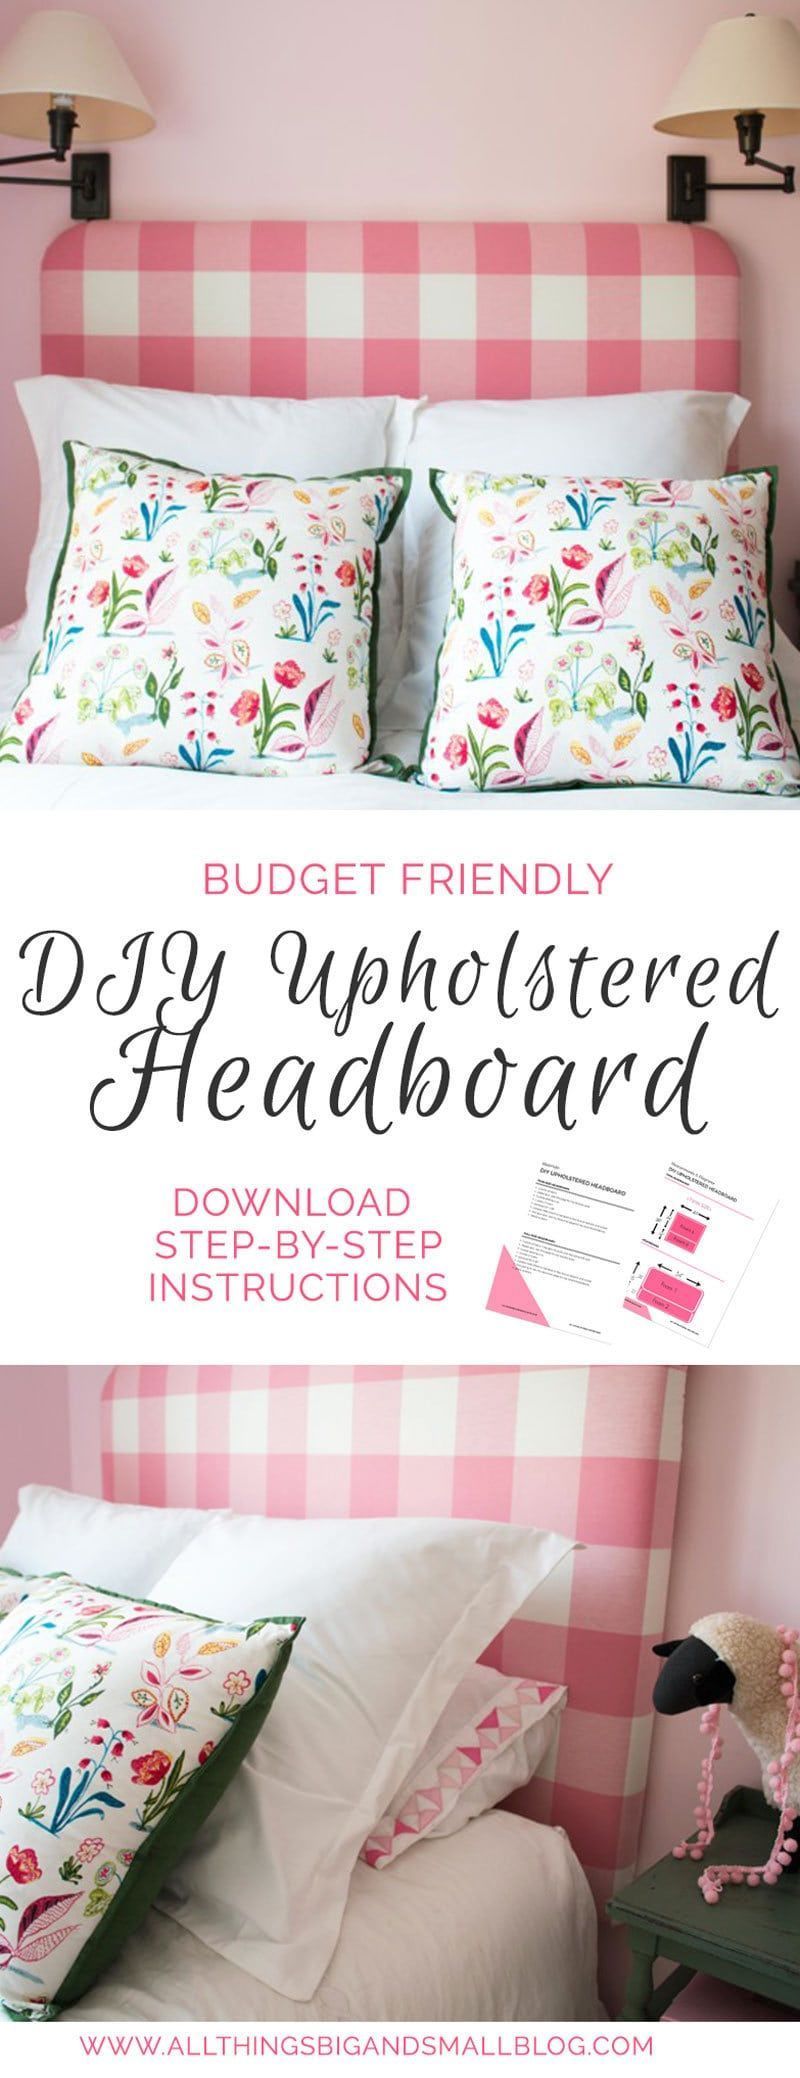 19 diy Headboard fabric ideas